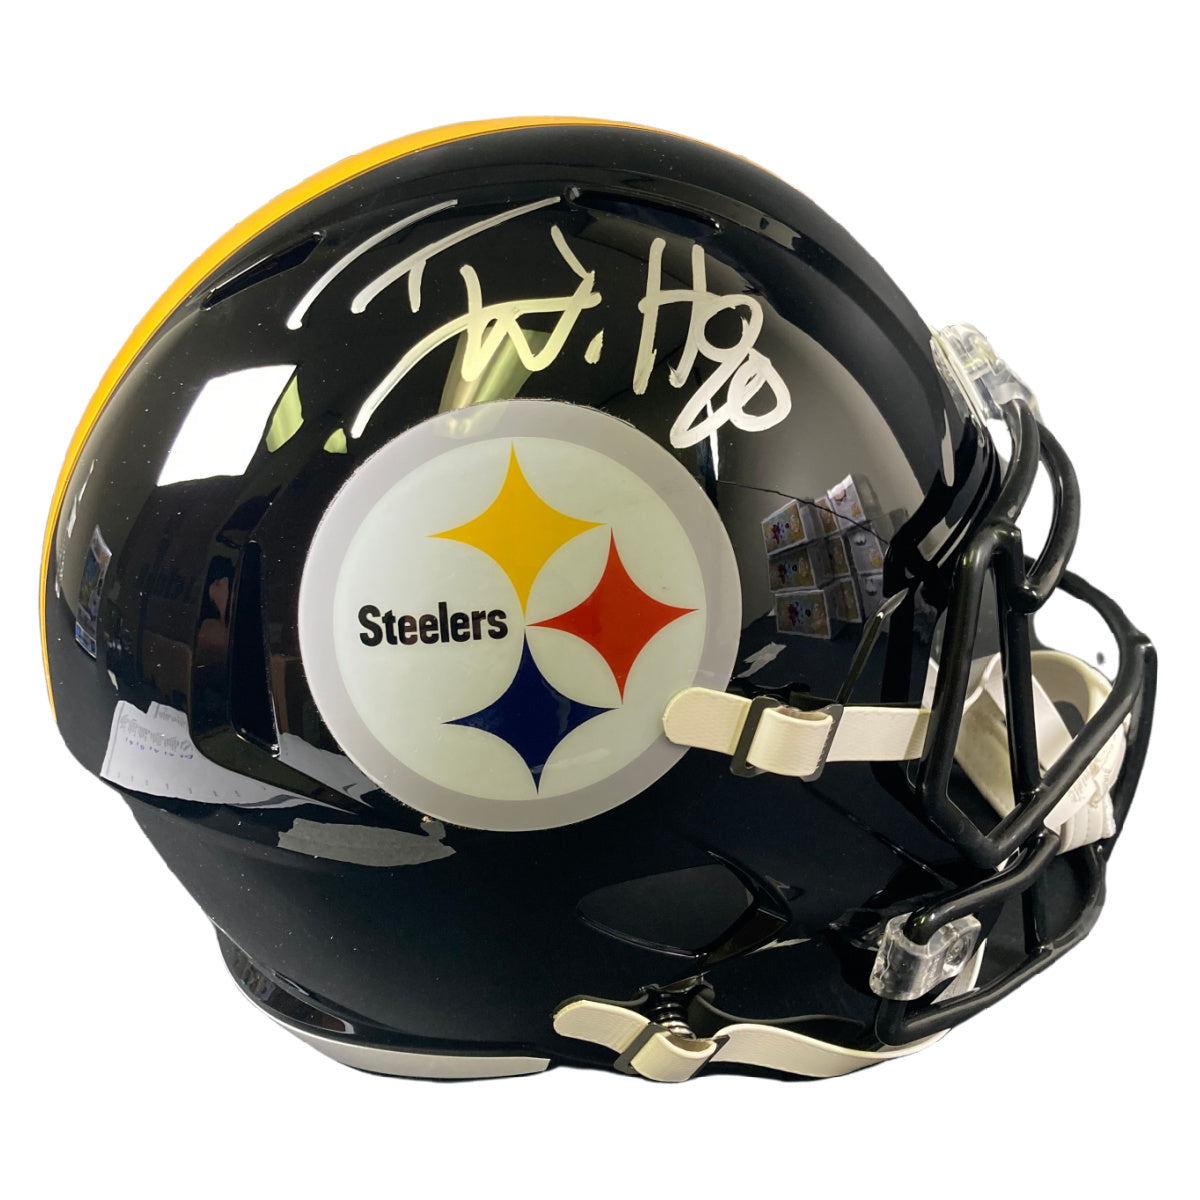 TJ Watt Signed FS Pittsburgh Steelers Helmet Autographed BAS COA #2